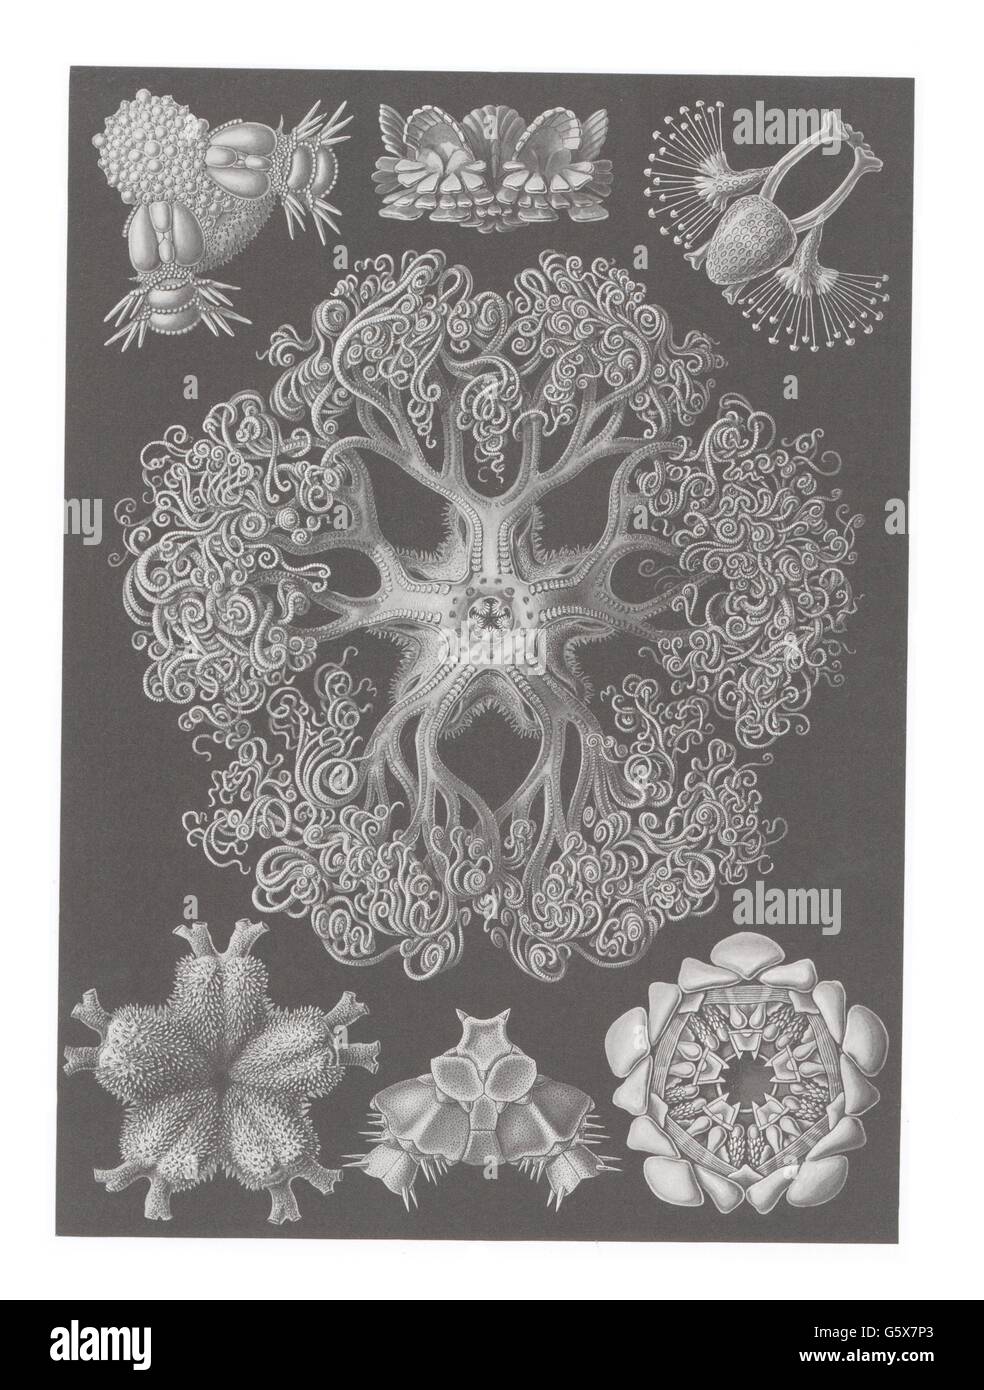 zoologia / Animali, echinodermi, stelle fragili (Ophiuroidea), litografia a colori, su: Ernst Haeckel, 'Kunstformen der Natur', Leipzig - Vienna, 1899 - 1904, diritti-aggiuntivi-clearences-non disponibili Foto Stock